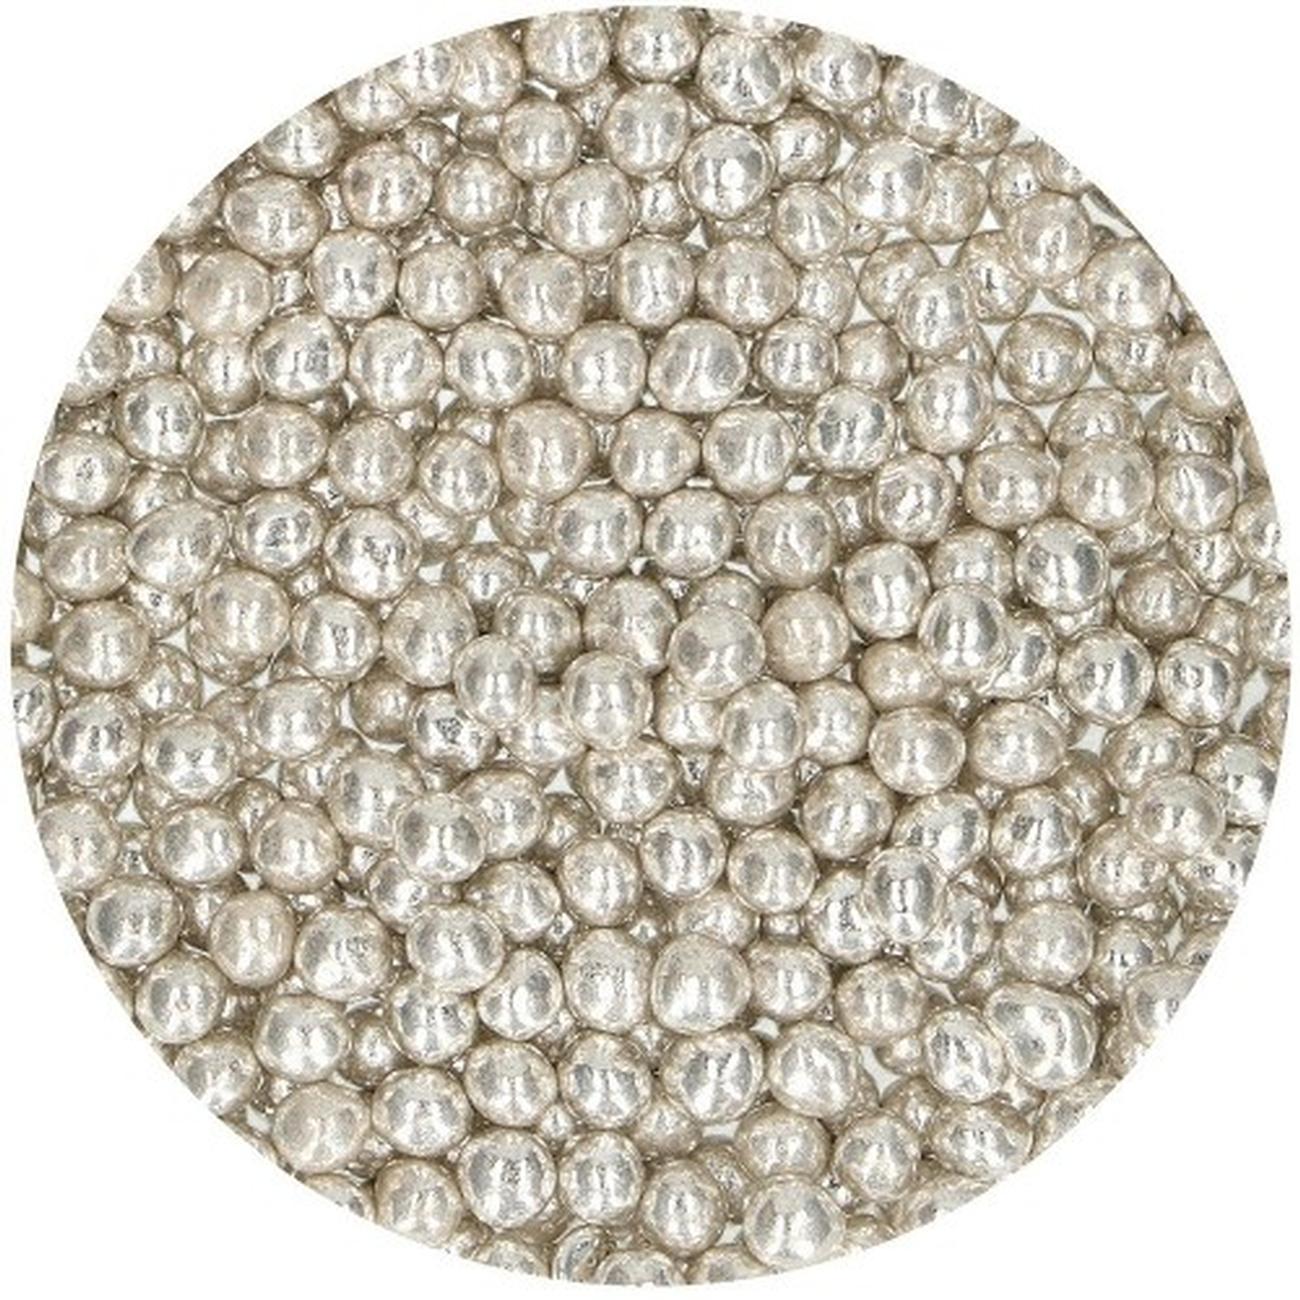 fun-cakes-edible-soft-pearls-medium-silver-balls-55g - FunCakes Edible Soft Pearls Medium Balls Silver 55g